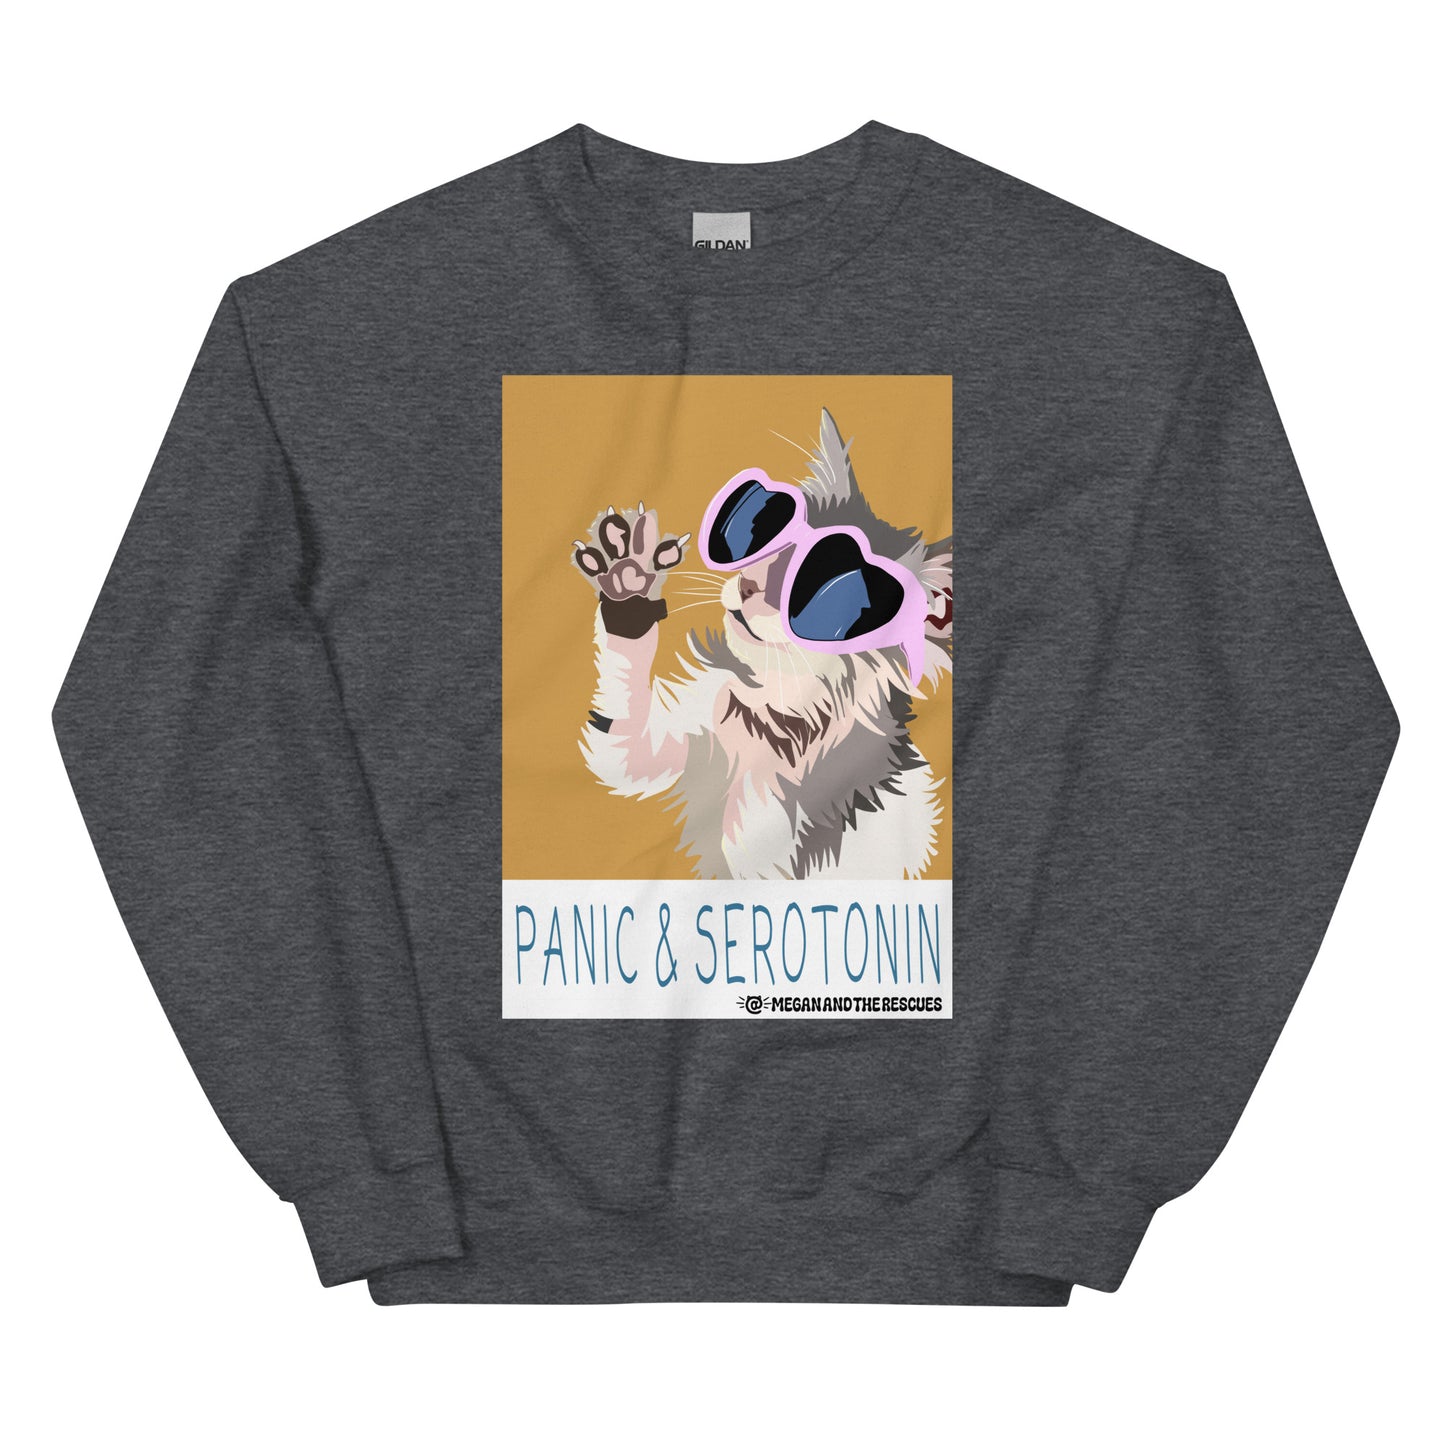 Panic & Serotonin - Unisex Sweatshirt